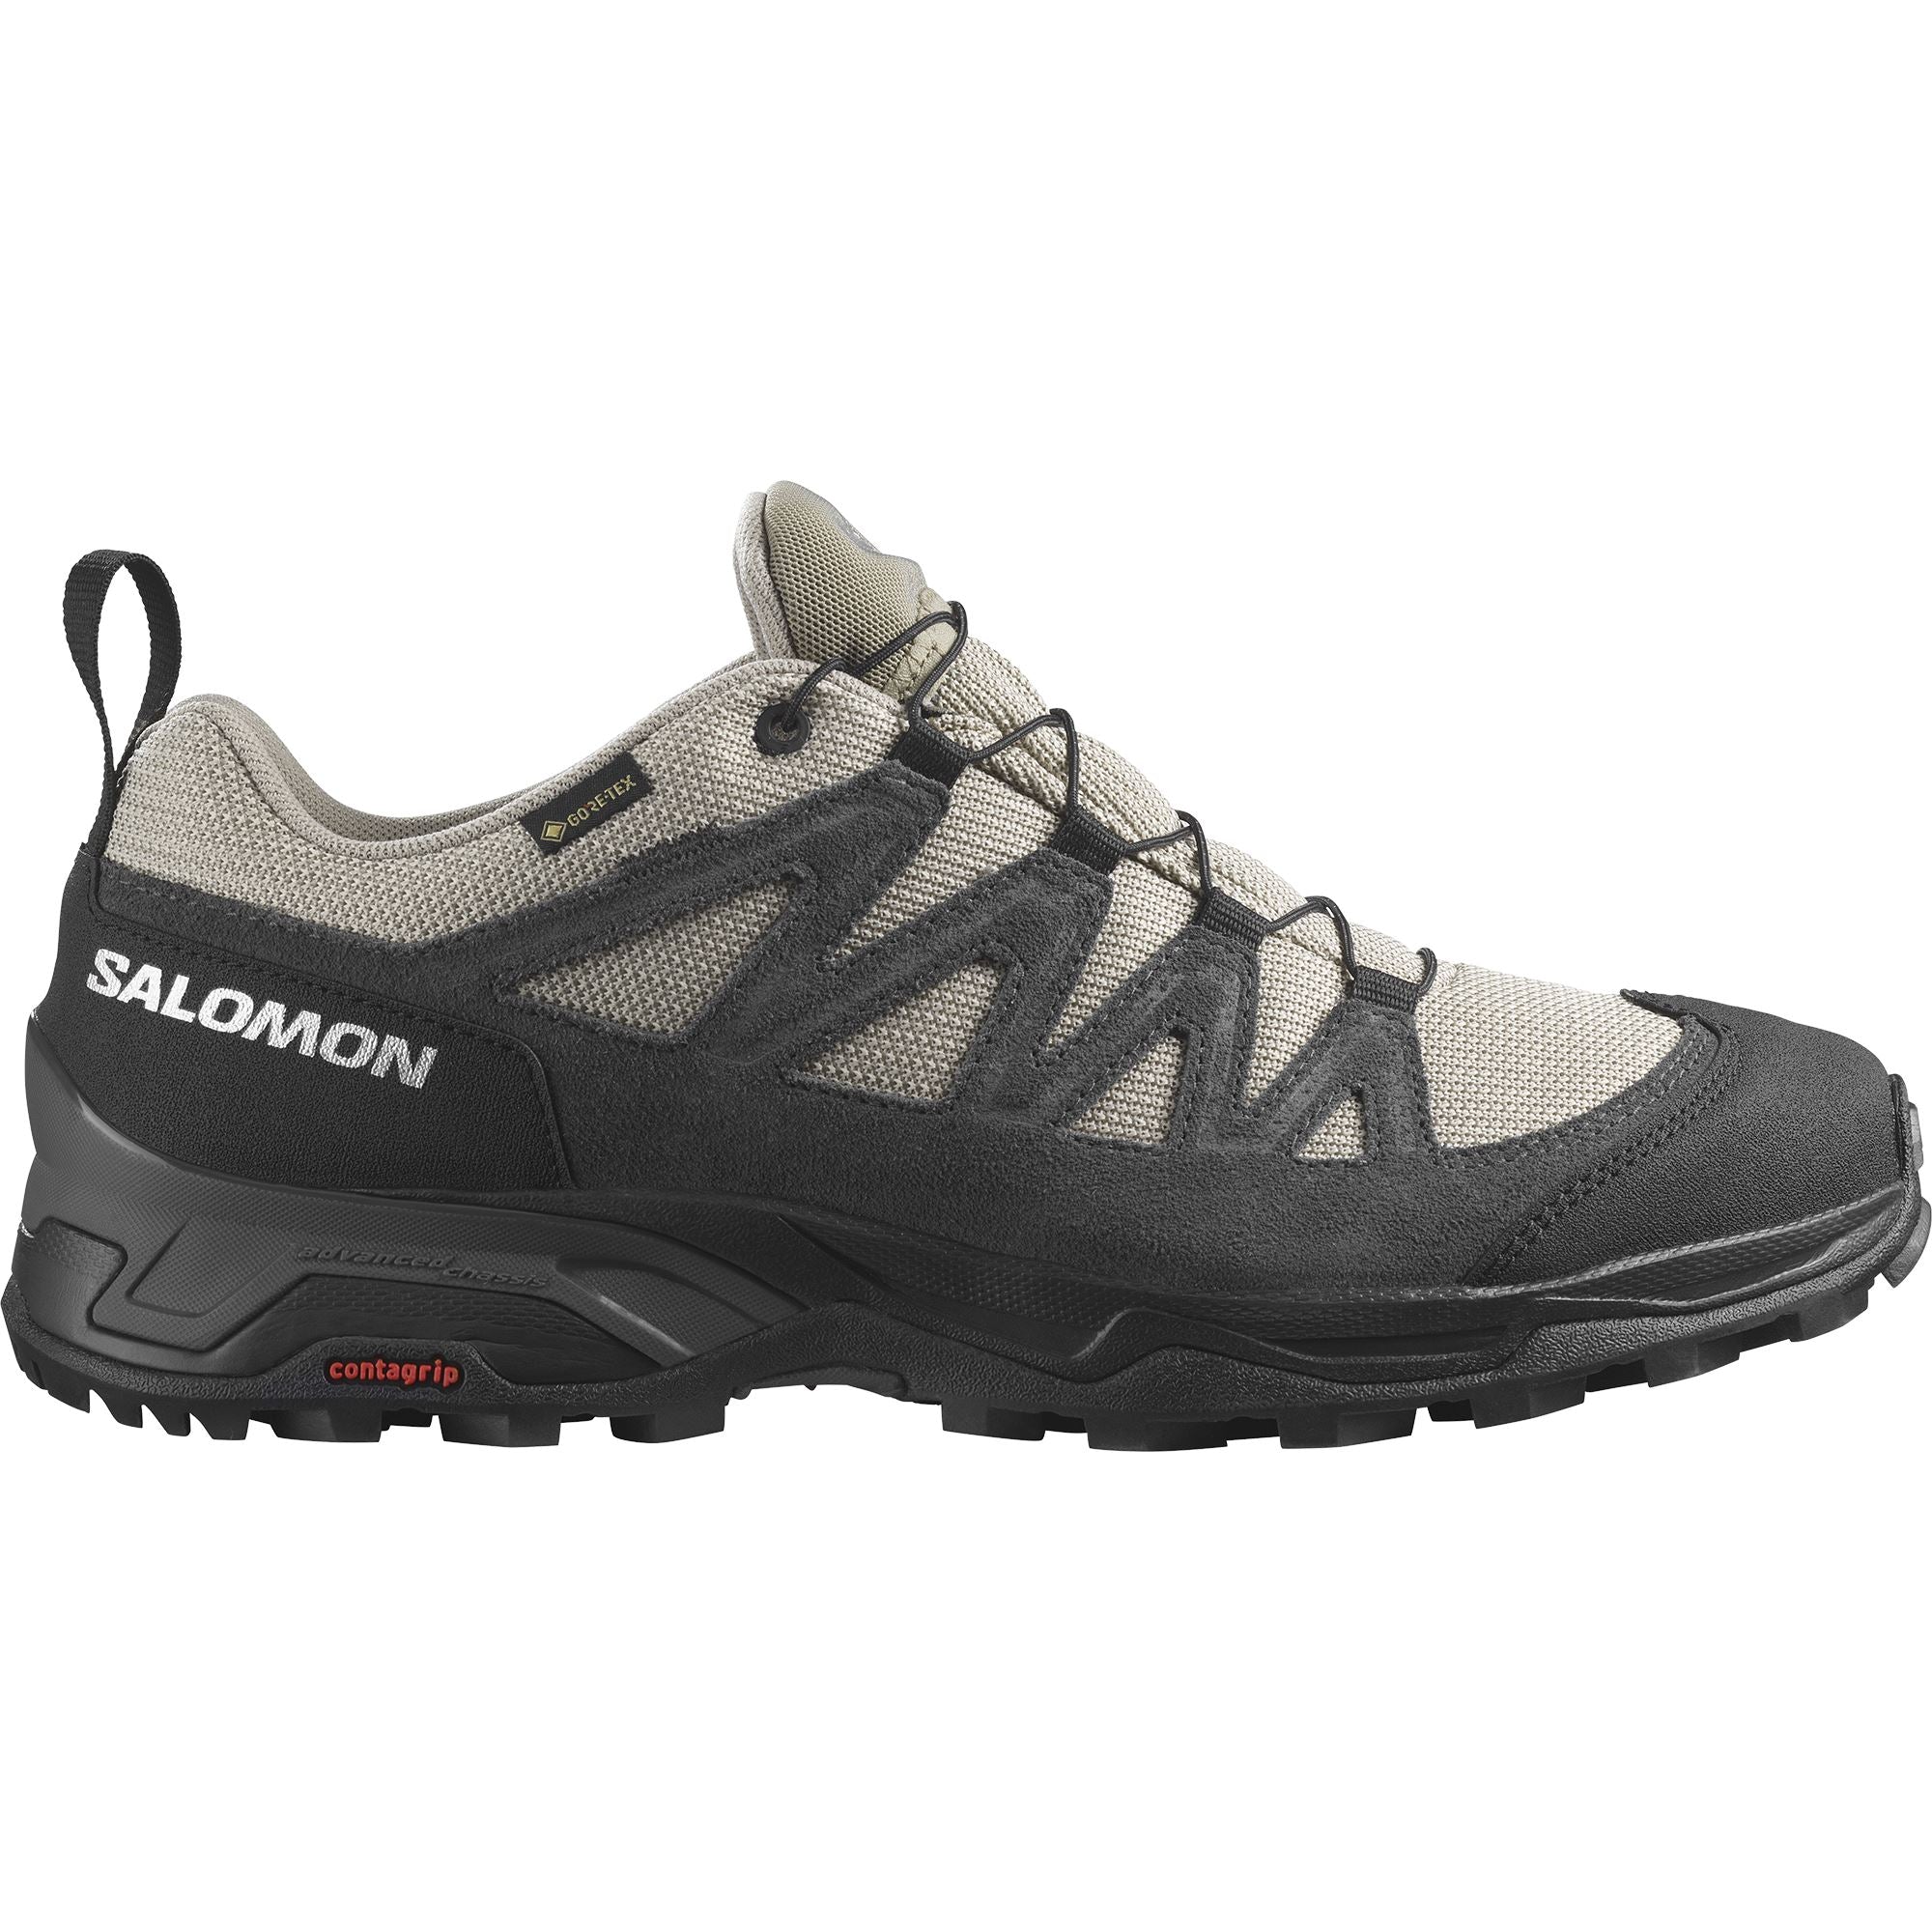 Salomon X Ward Leather Gore-Tex Men's Leather Hiking Shoes Vintage Khaki/Black/Pewter US 8 